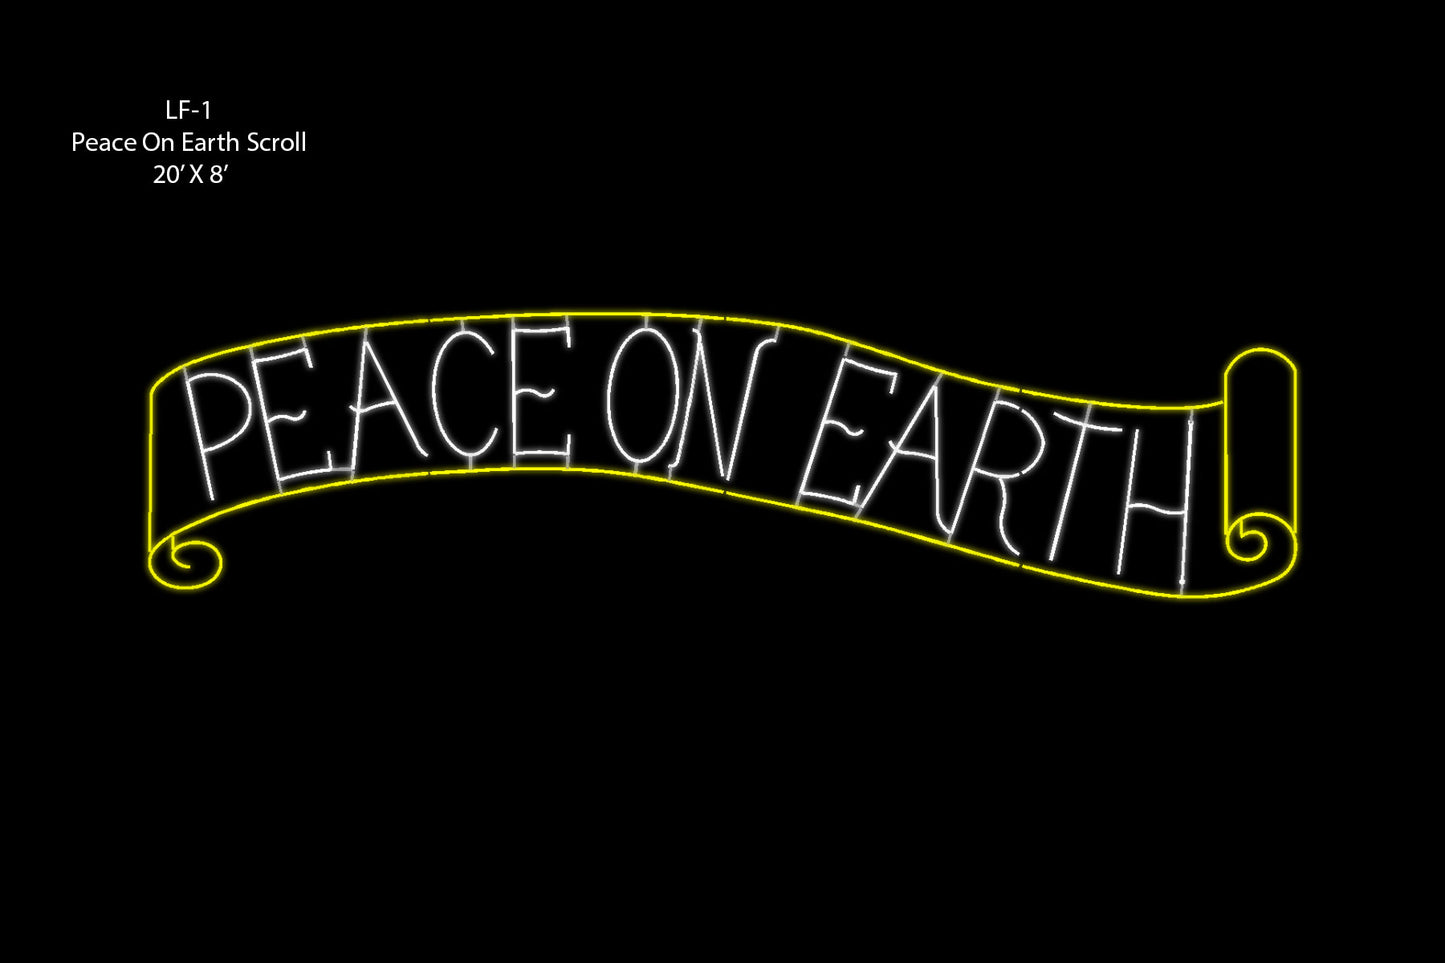 Peace on Earth Scroll